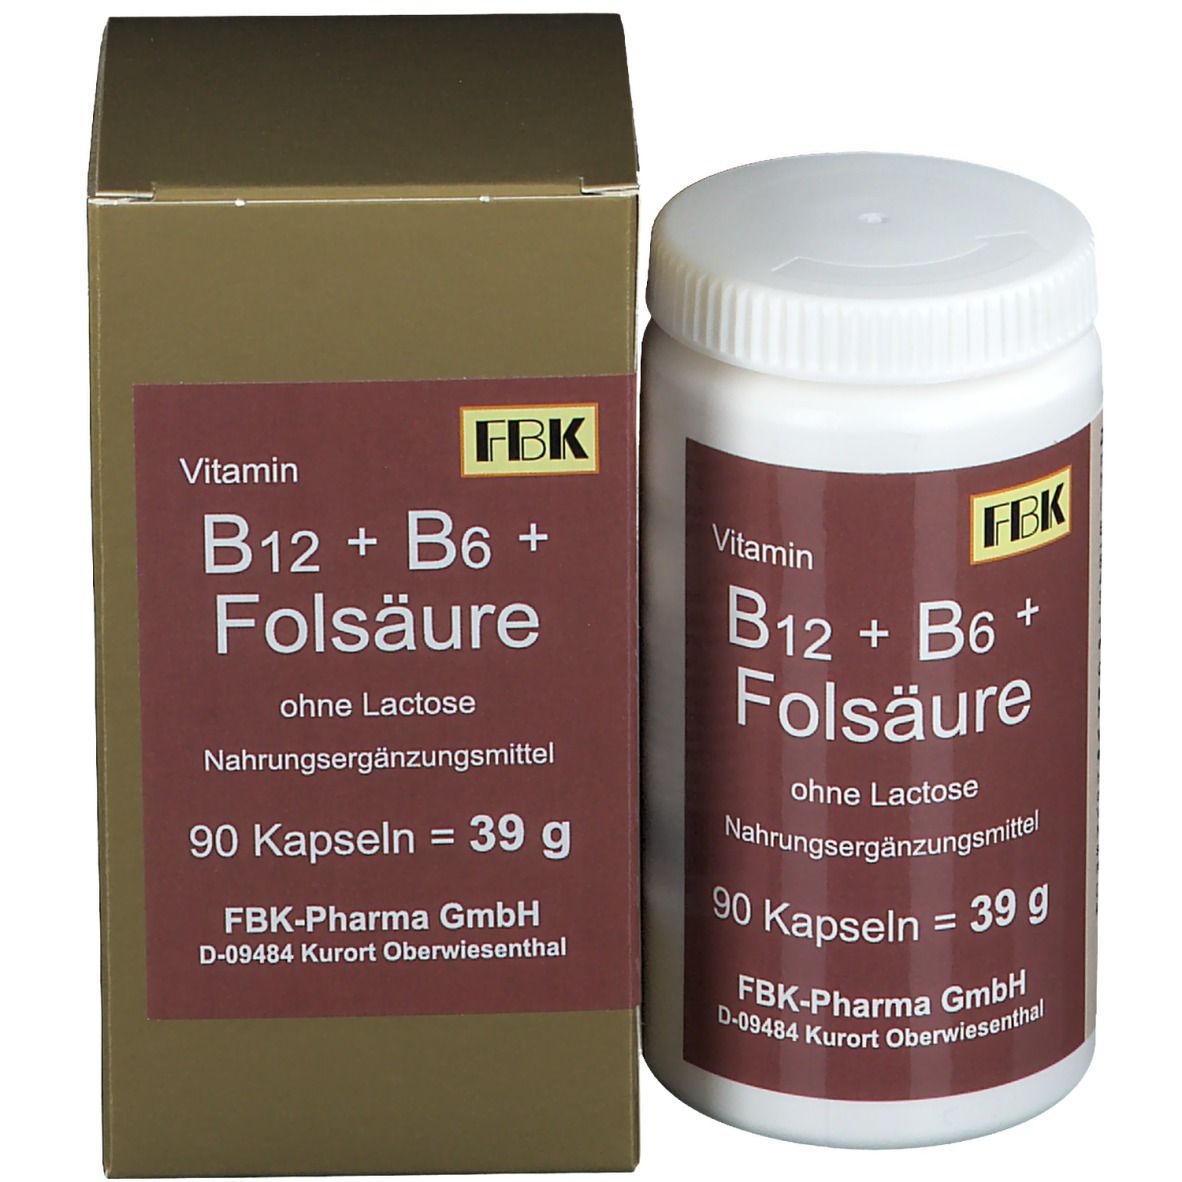 Vitamin B12 + B6 + Folsäure ohne Lactose